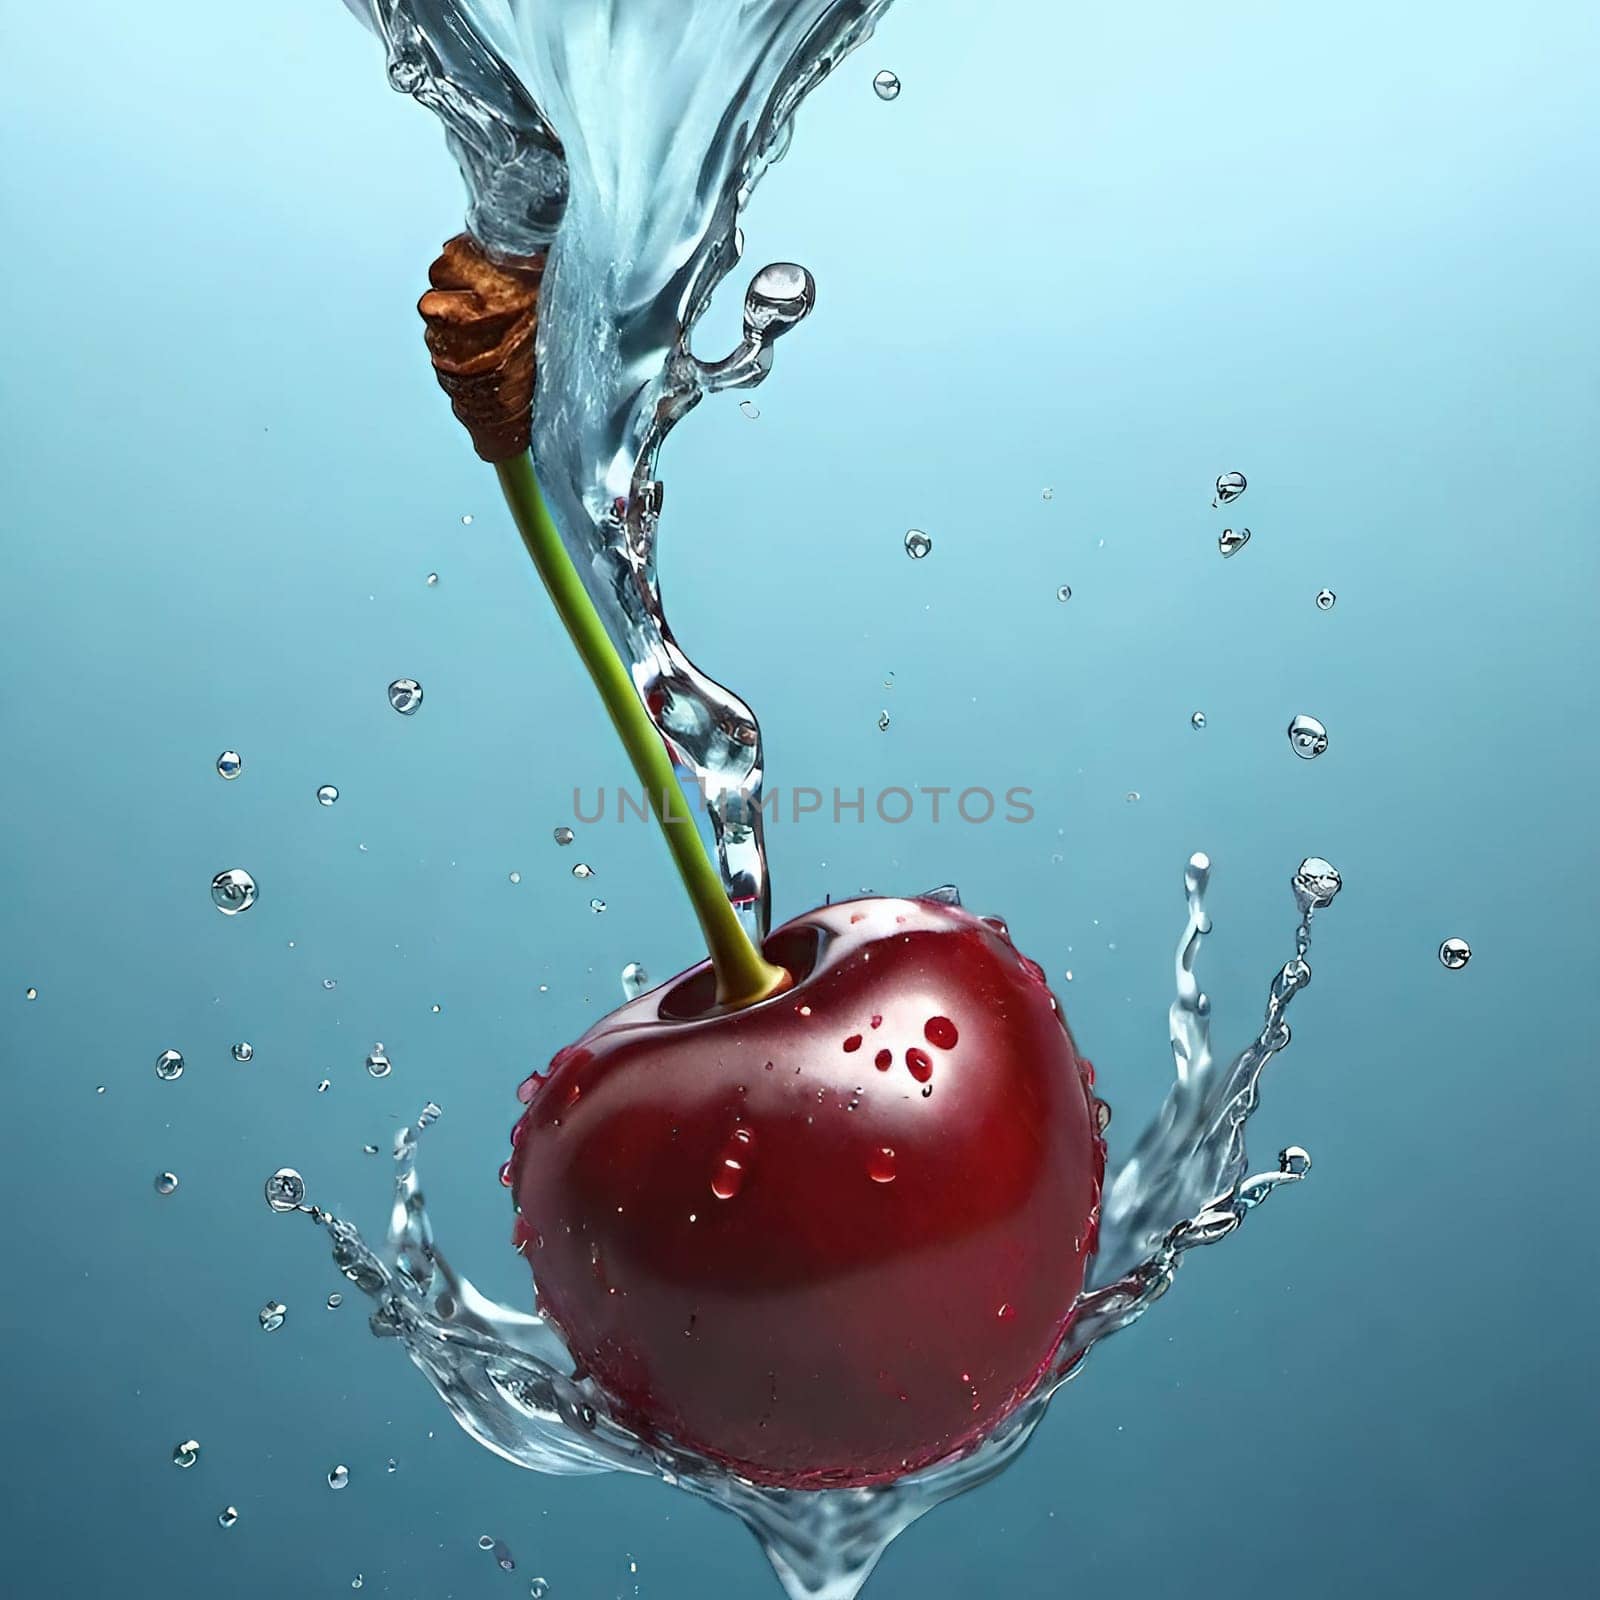 cherry with water splash isolated on background. 3d illustration.cherry splashing into water on background, close-up.Cherry falling into water with splash on background